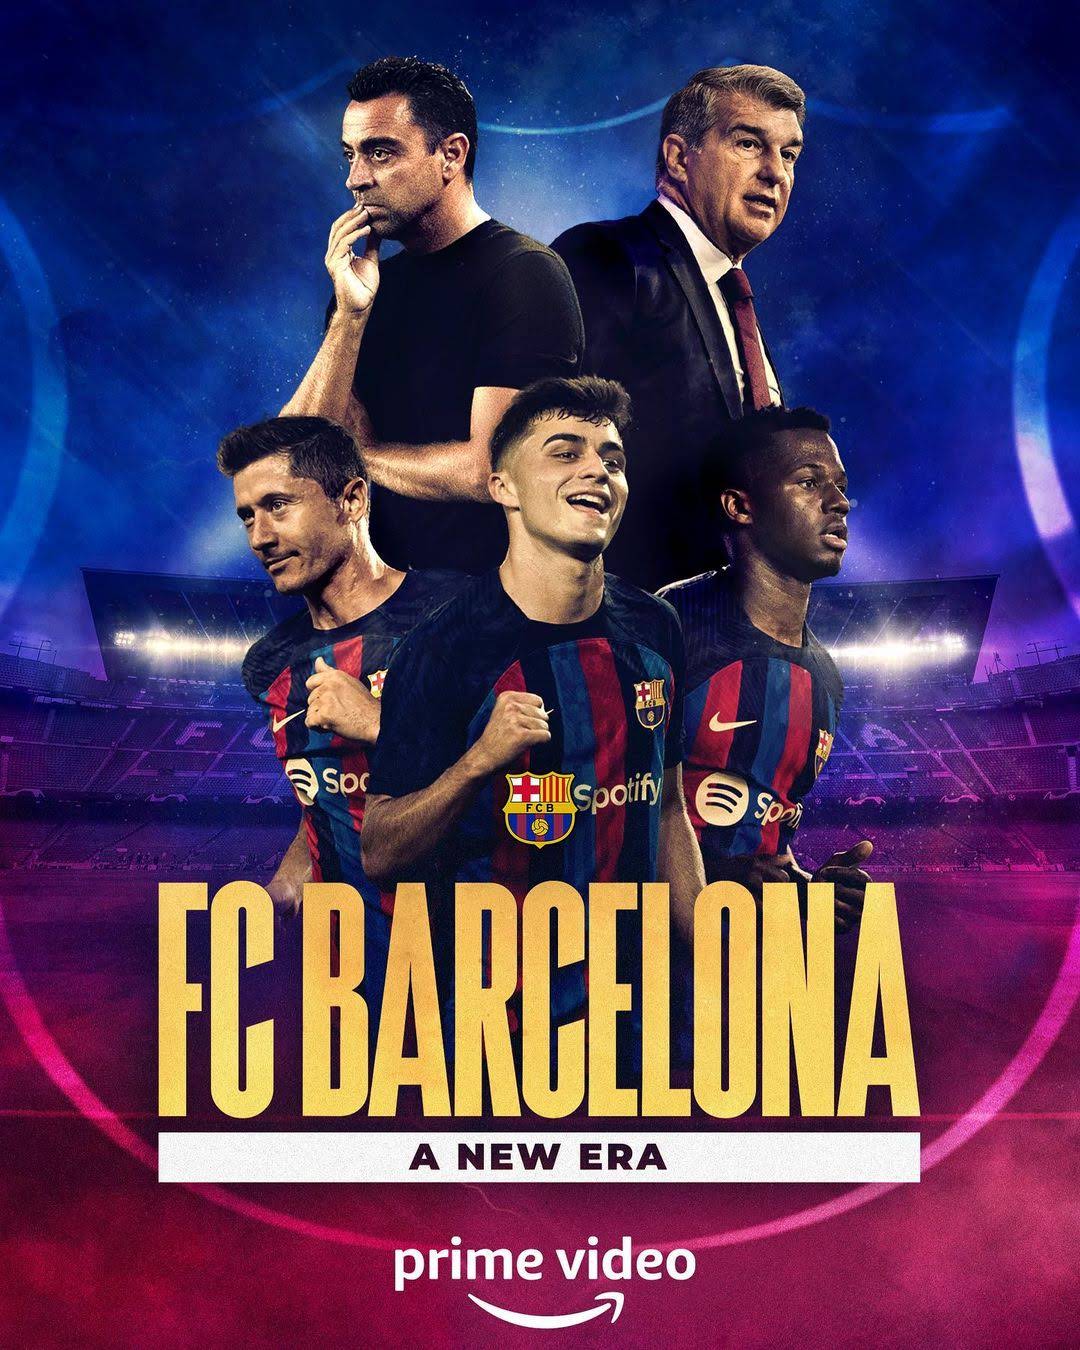 TV ratings for FC Barcelona, A New Era in Brazil. Amazon Prime Video TV series